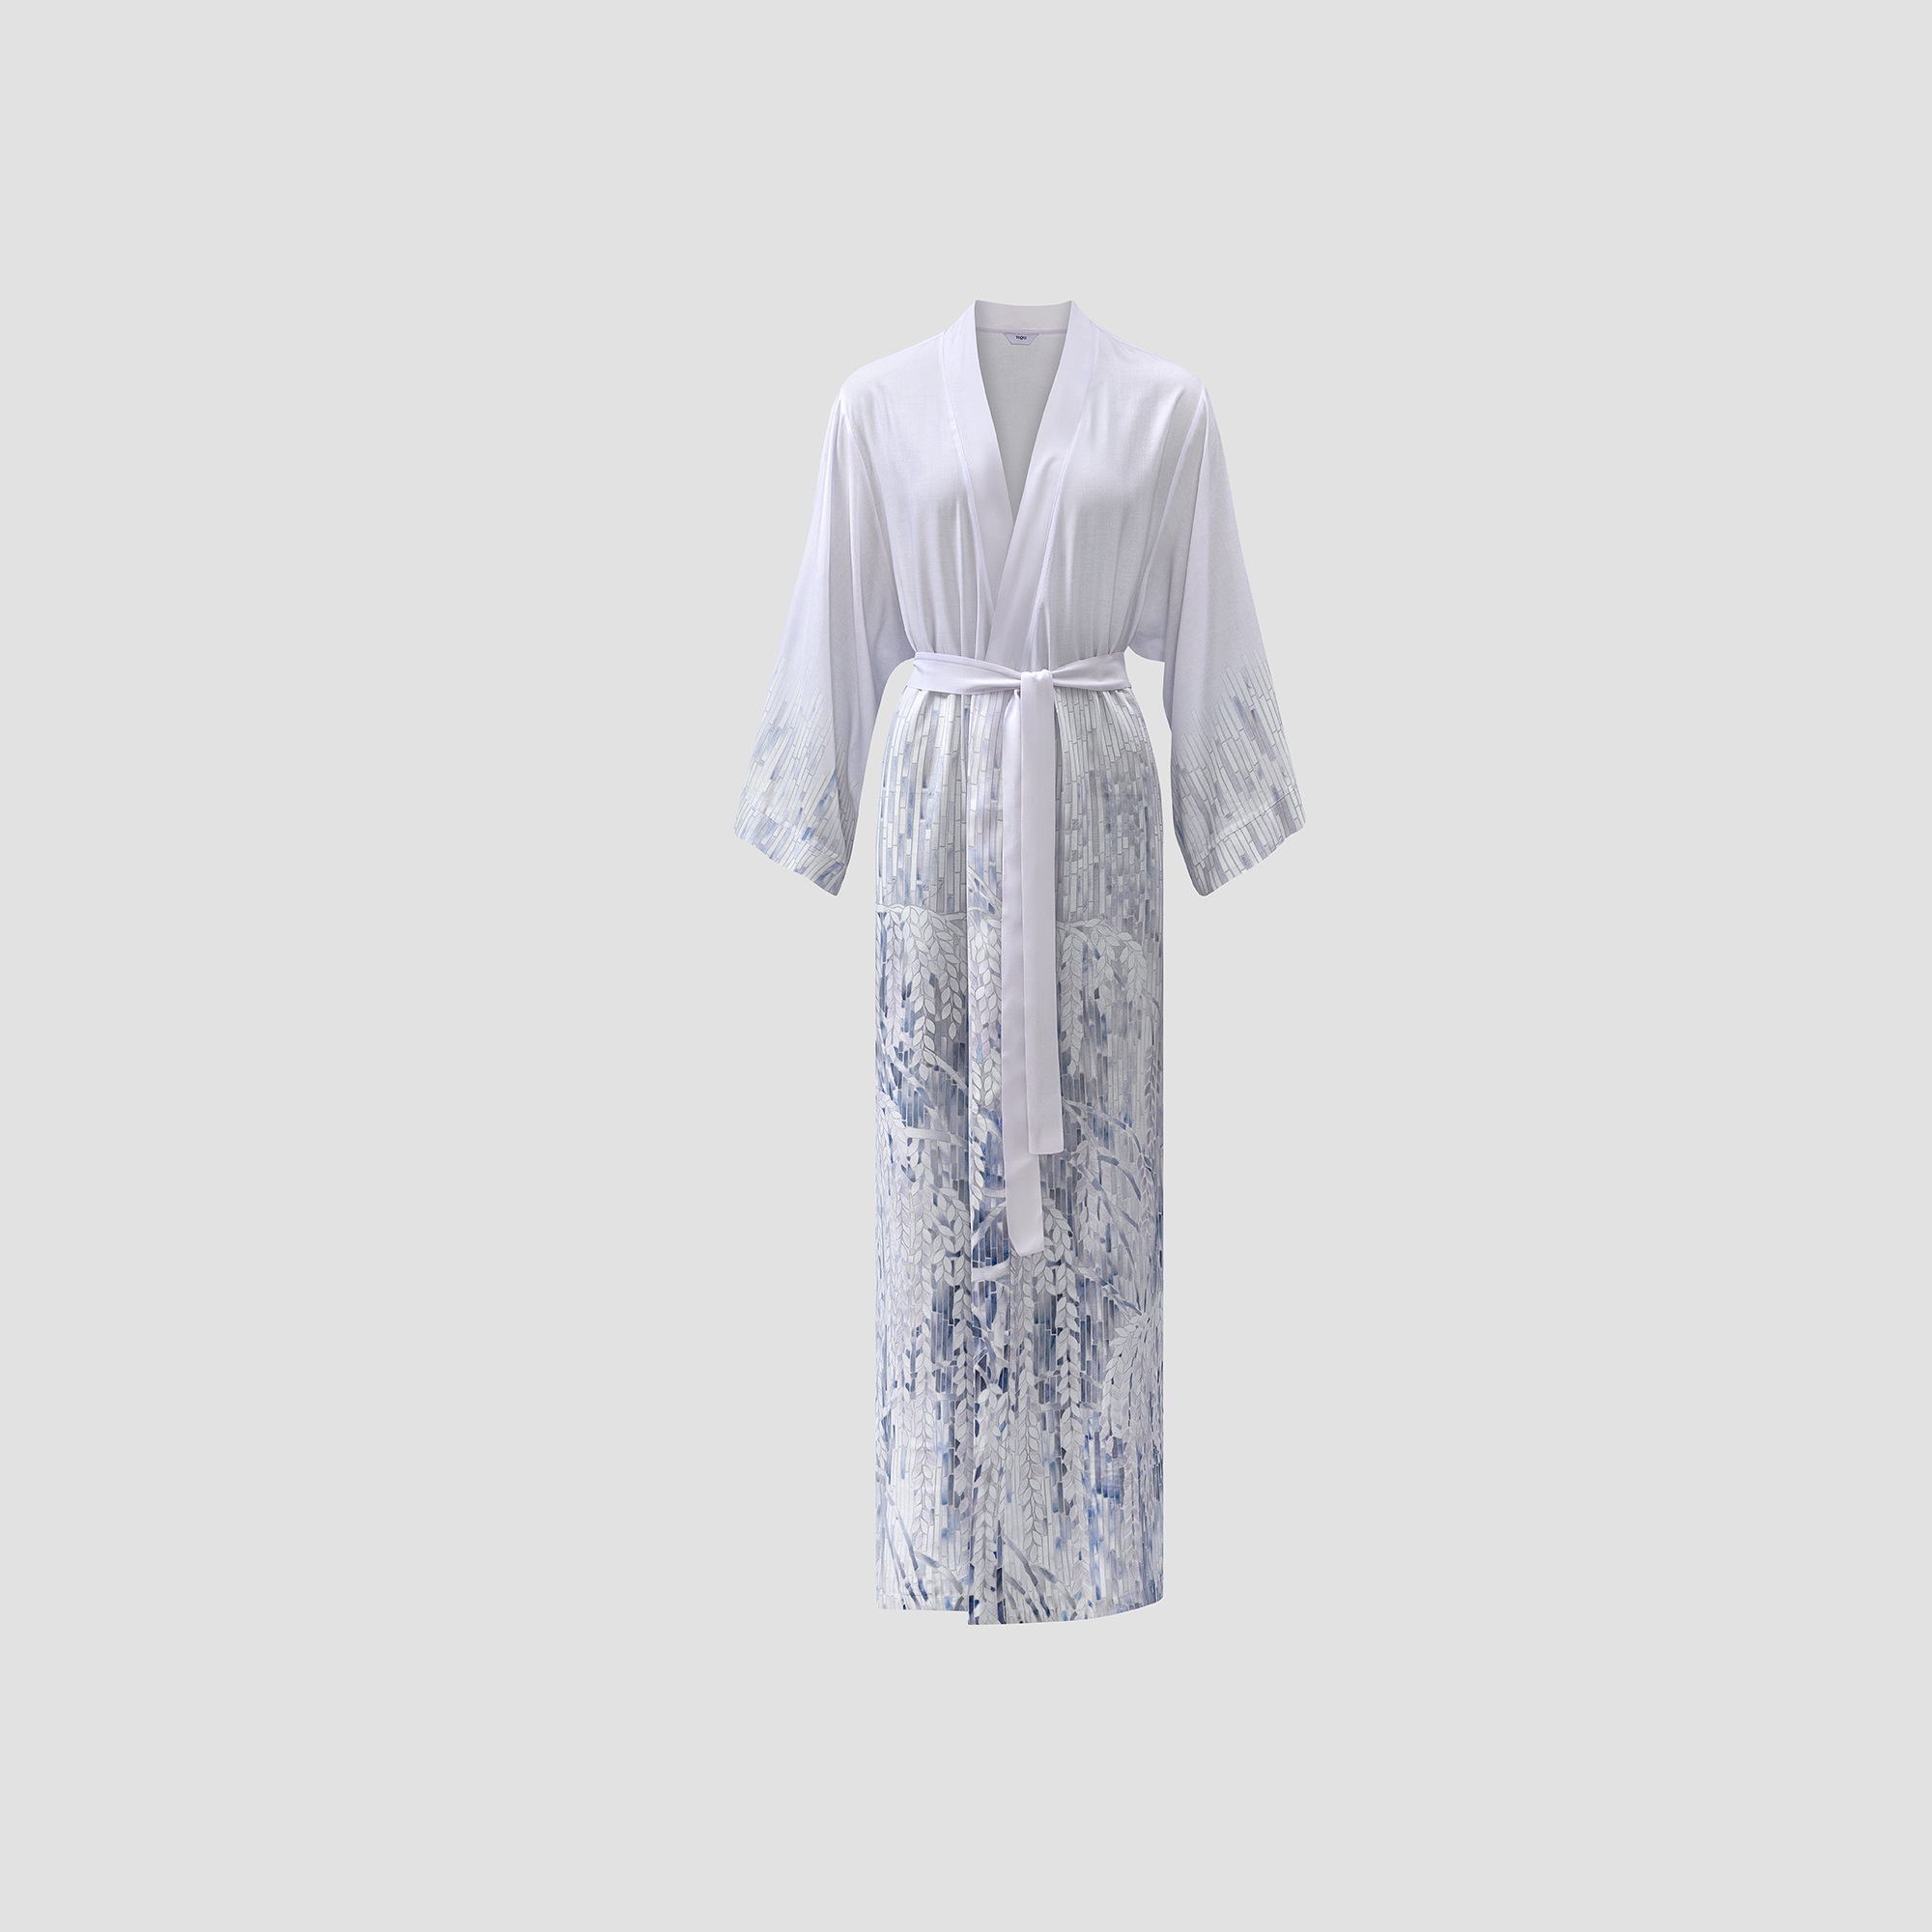 Кимоно Togas Вилонна бело-синее M(46) платье кимоно